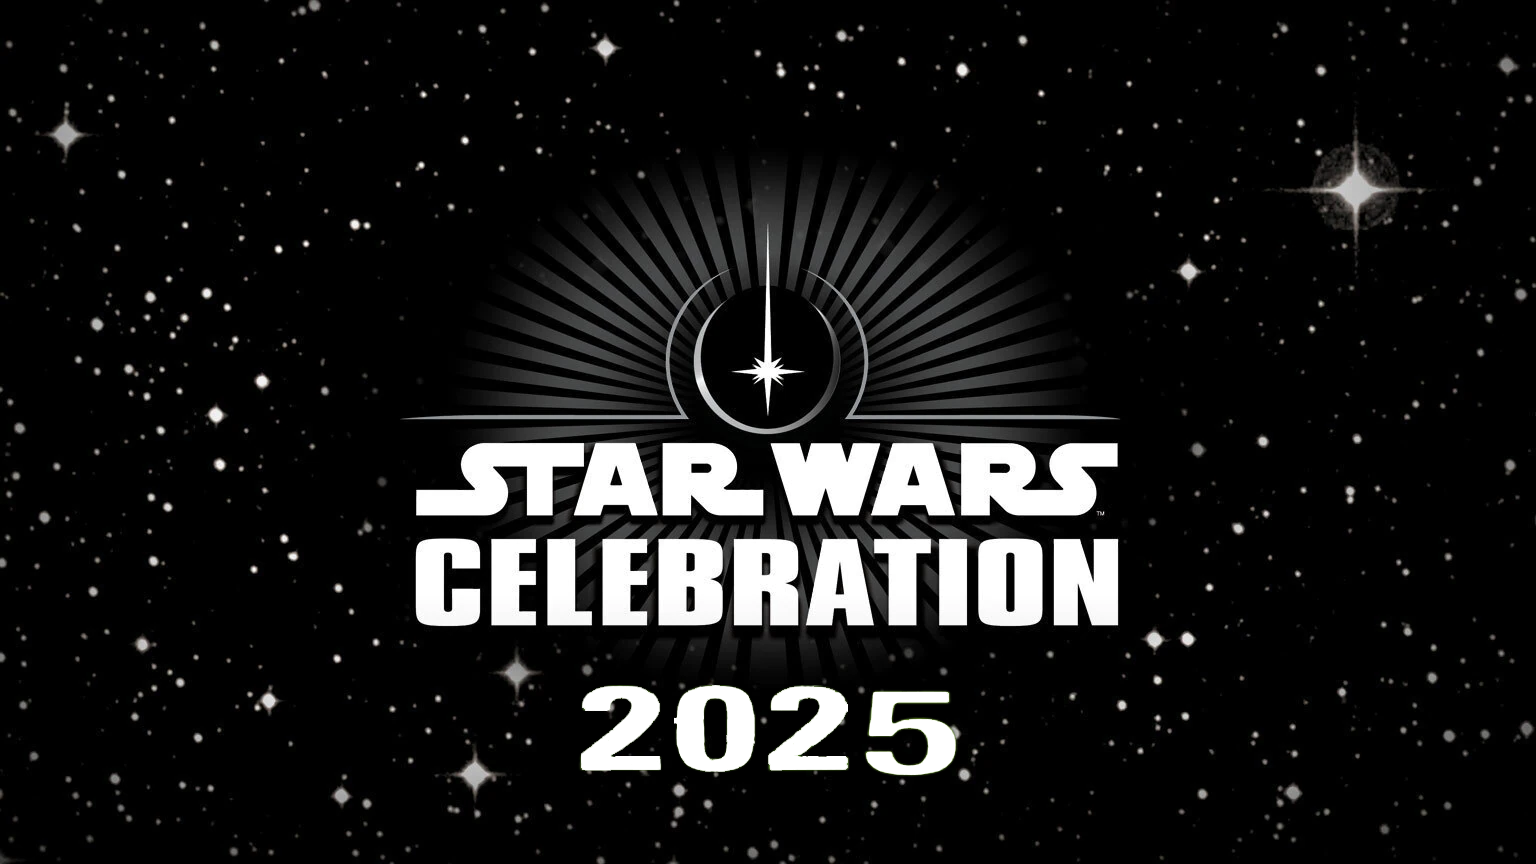 the-next-star-wars-celebration-will-be-in-2025-star-wars-news-net